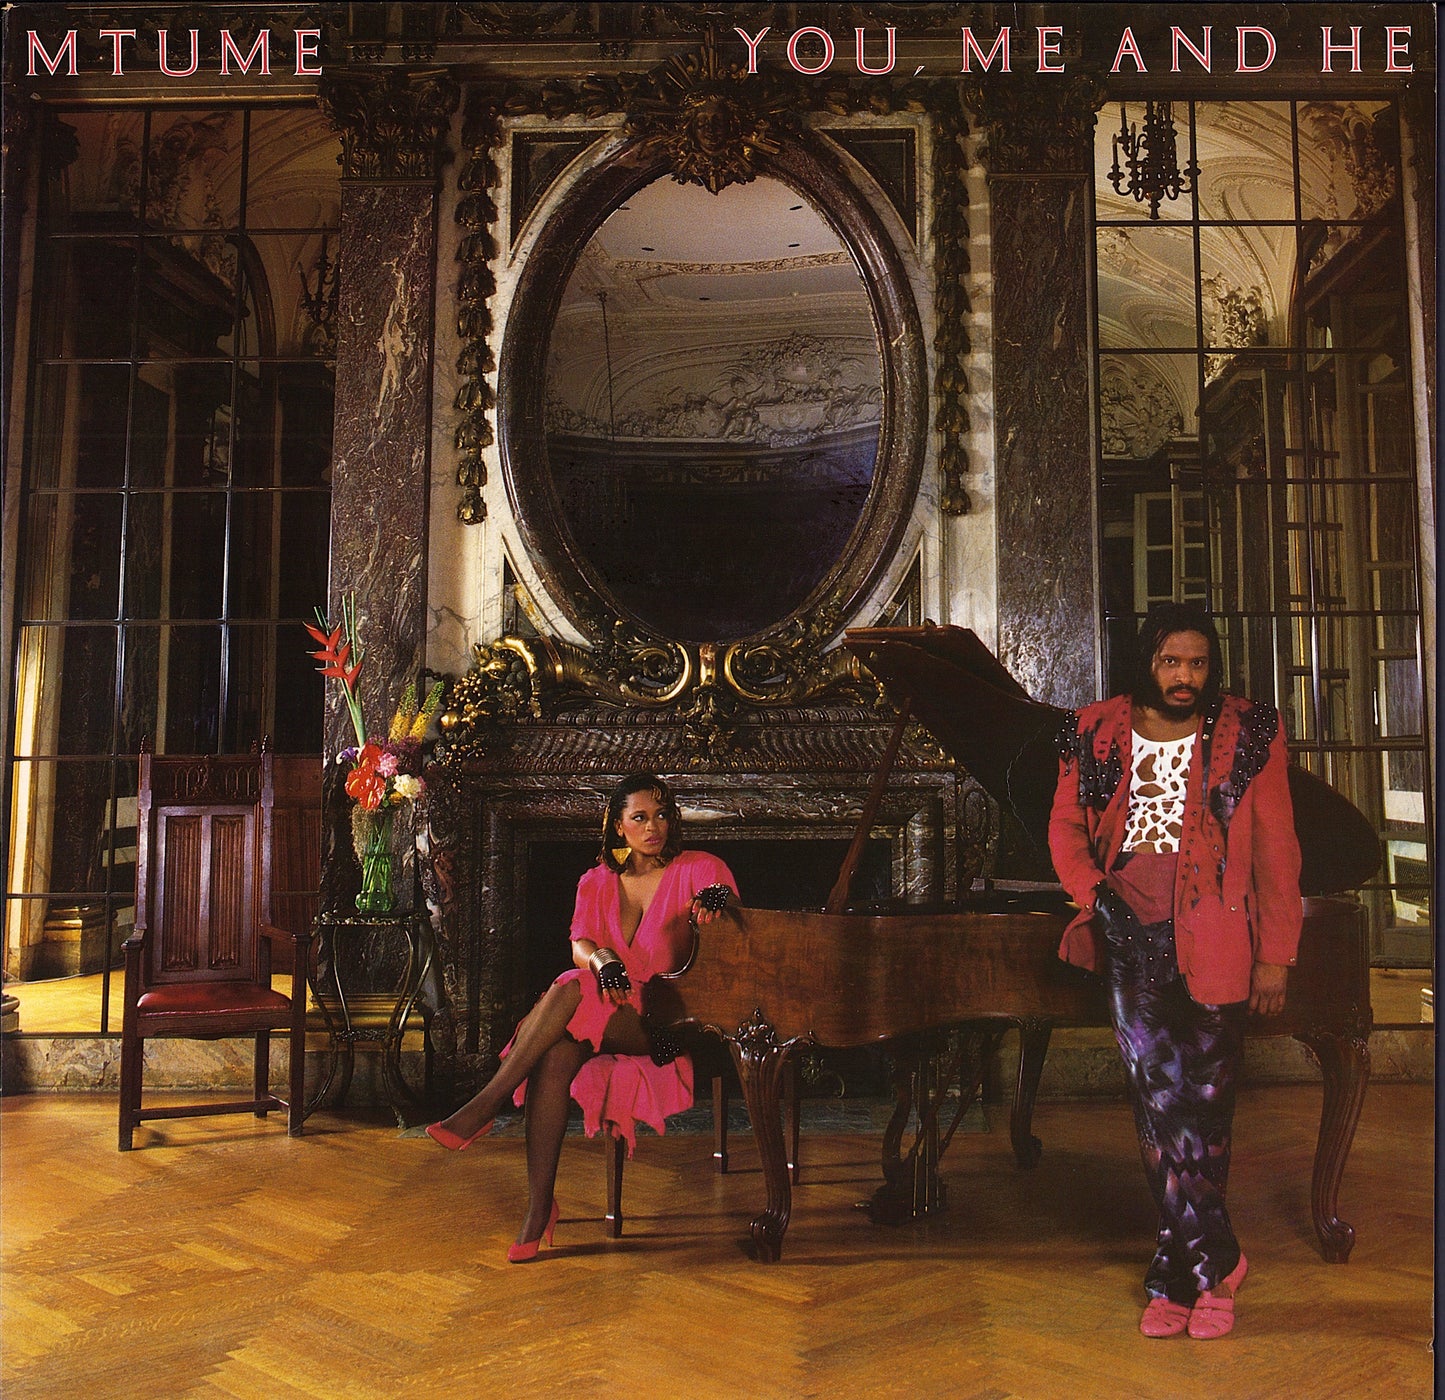 Mtume - You, Me And He Vinyl LP